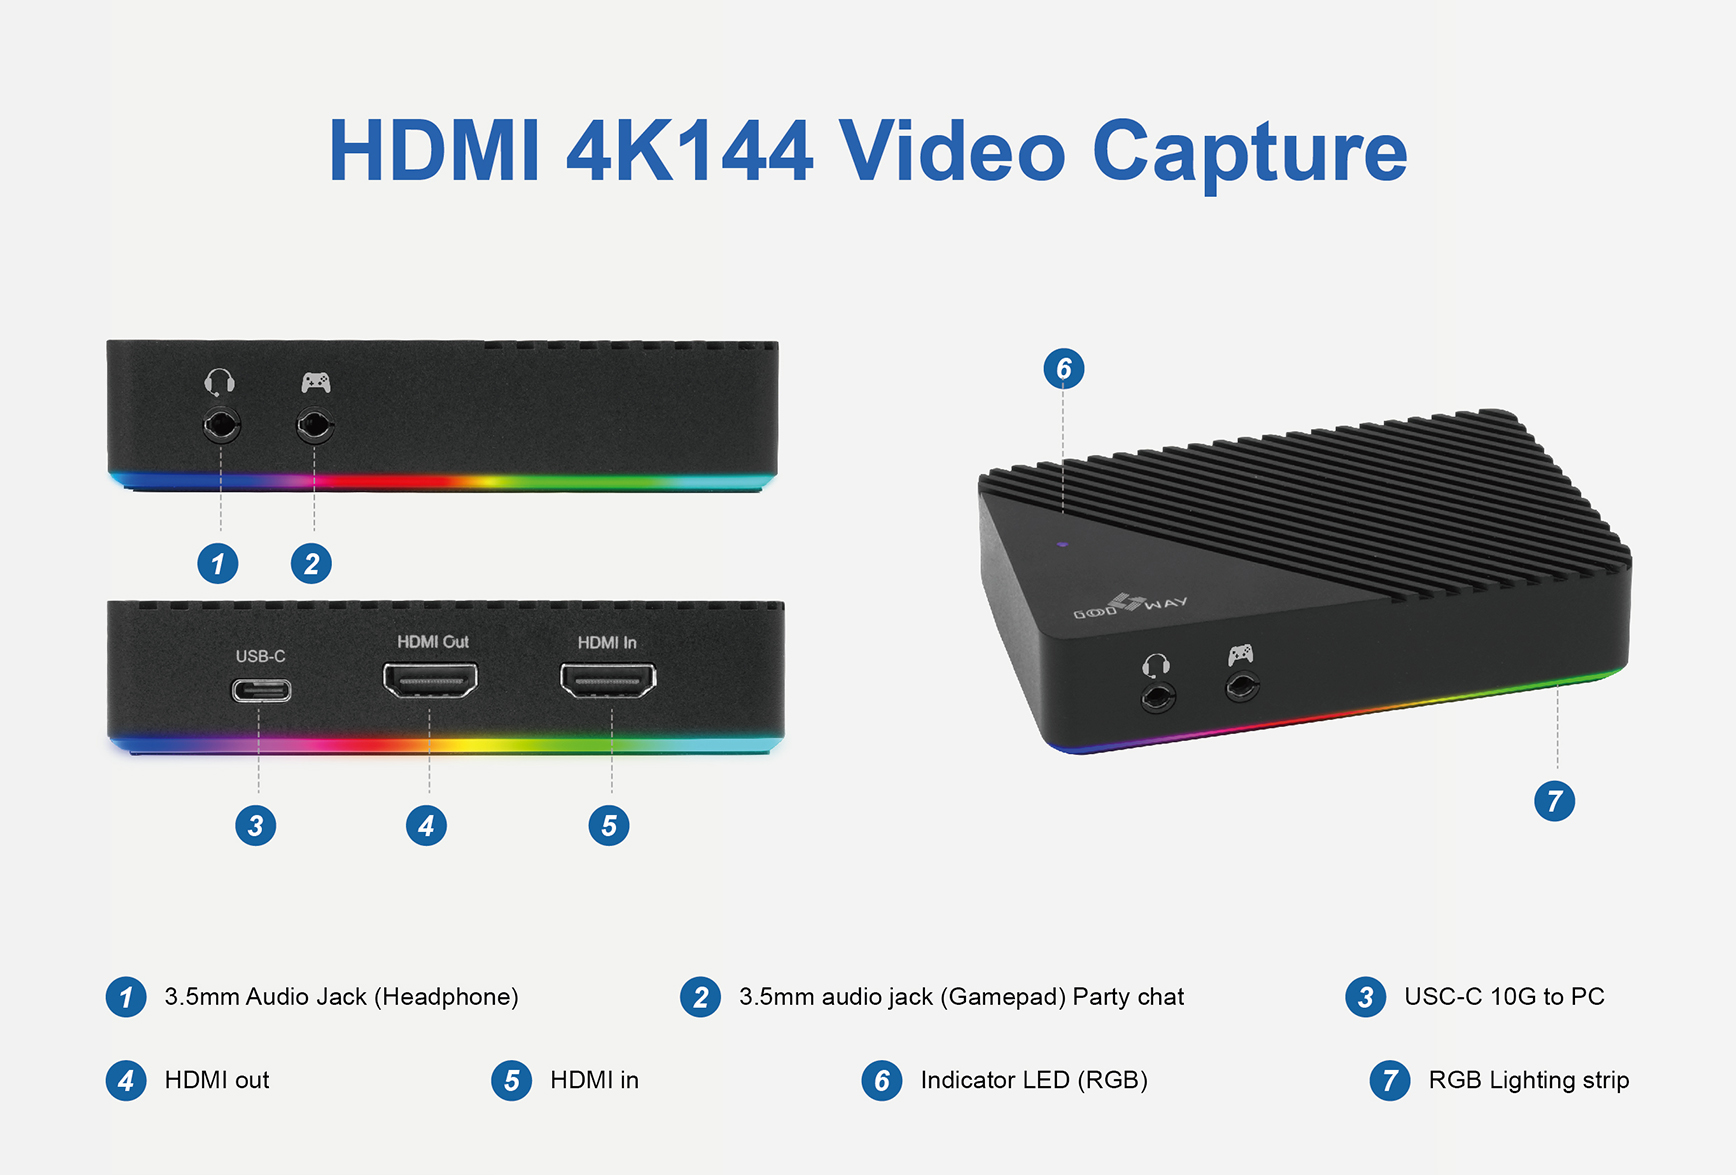 VUZ7261 HDMI 4K144 Video Capture